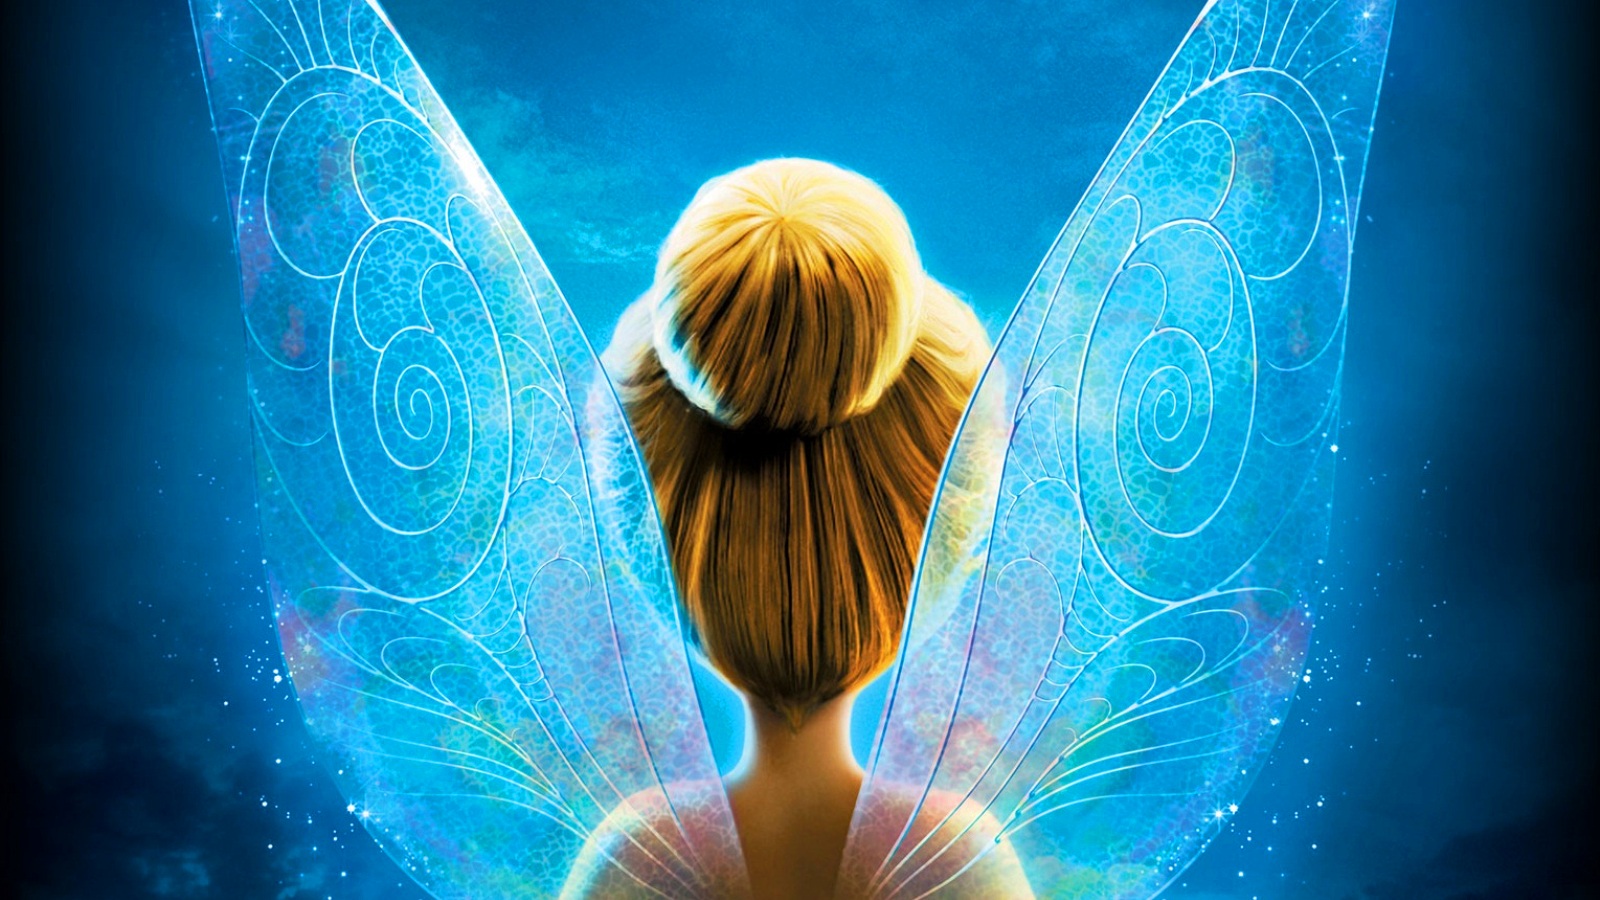 Tinkerbell Secret Of The Wings HD Wallpaper